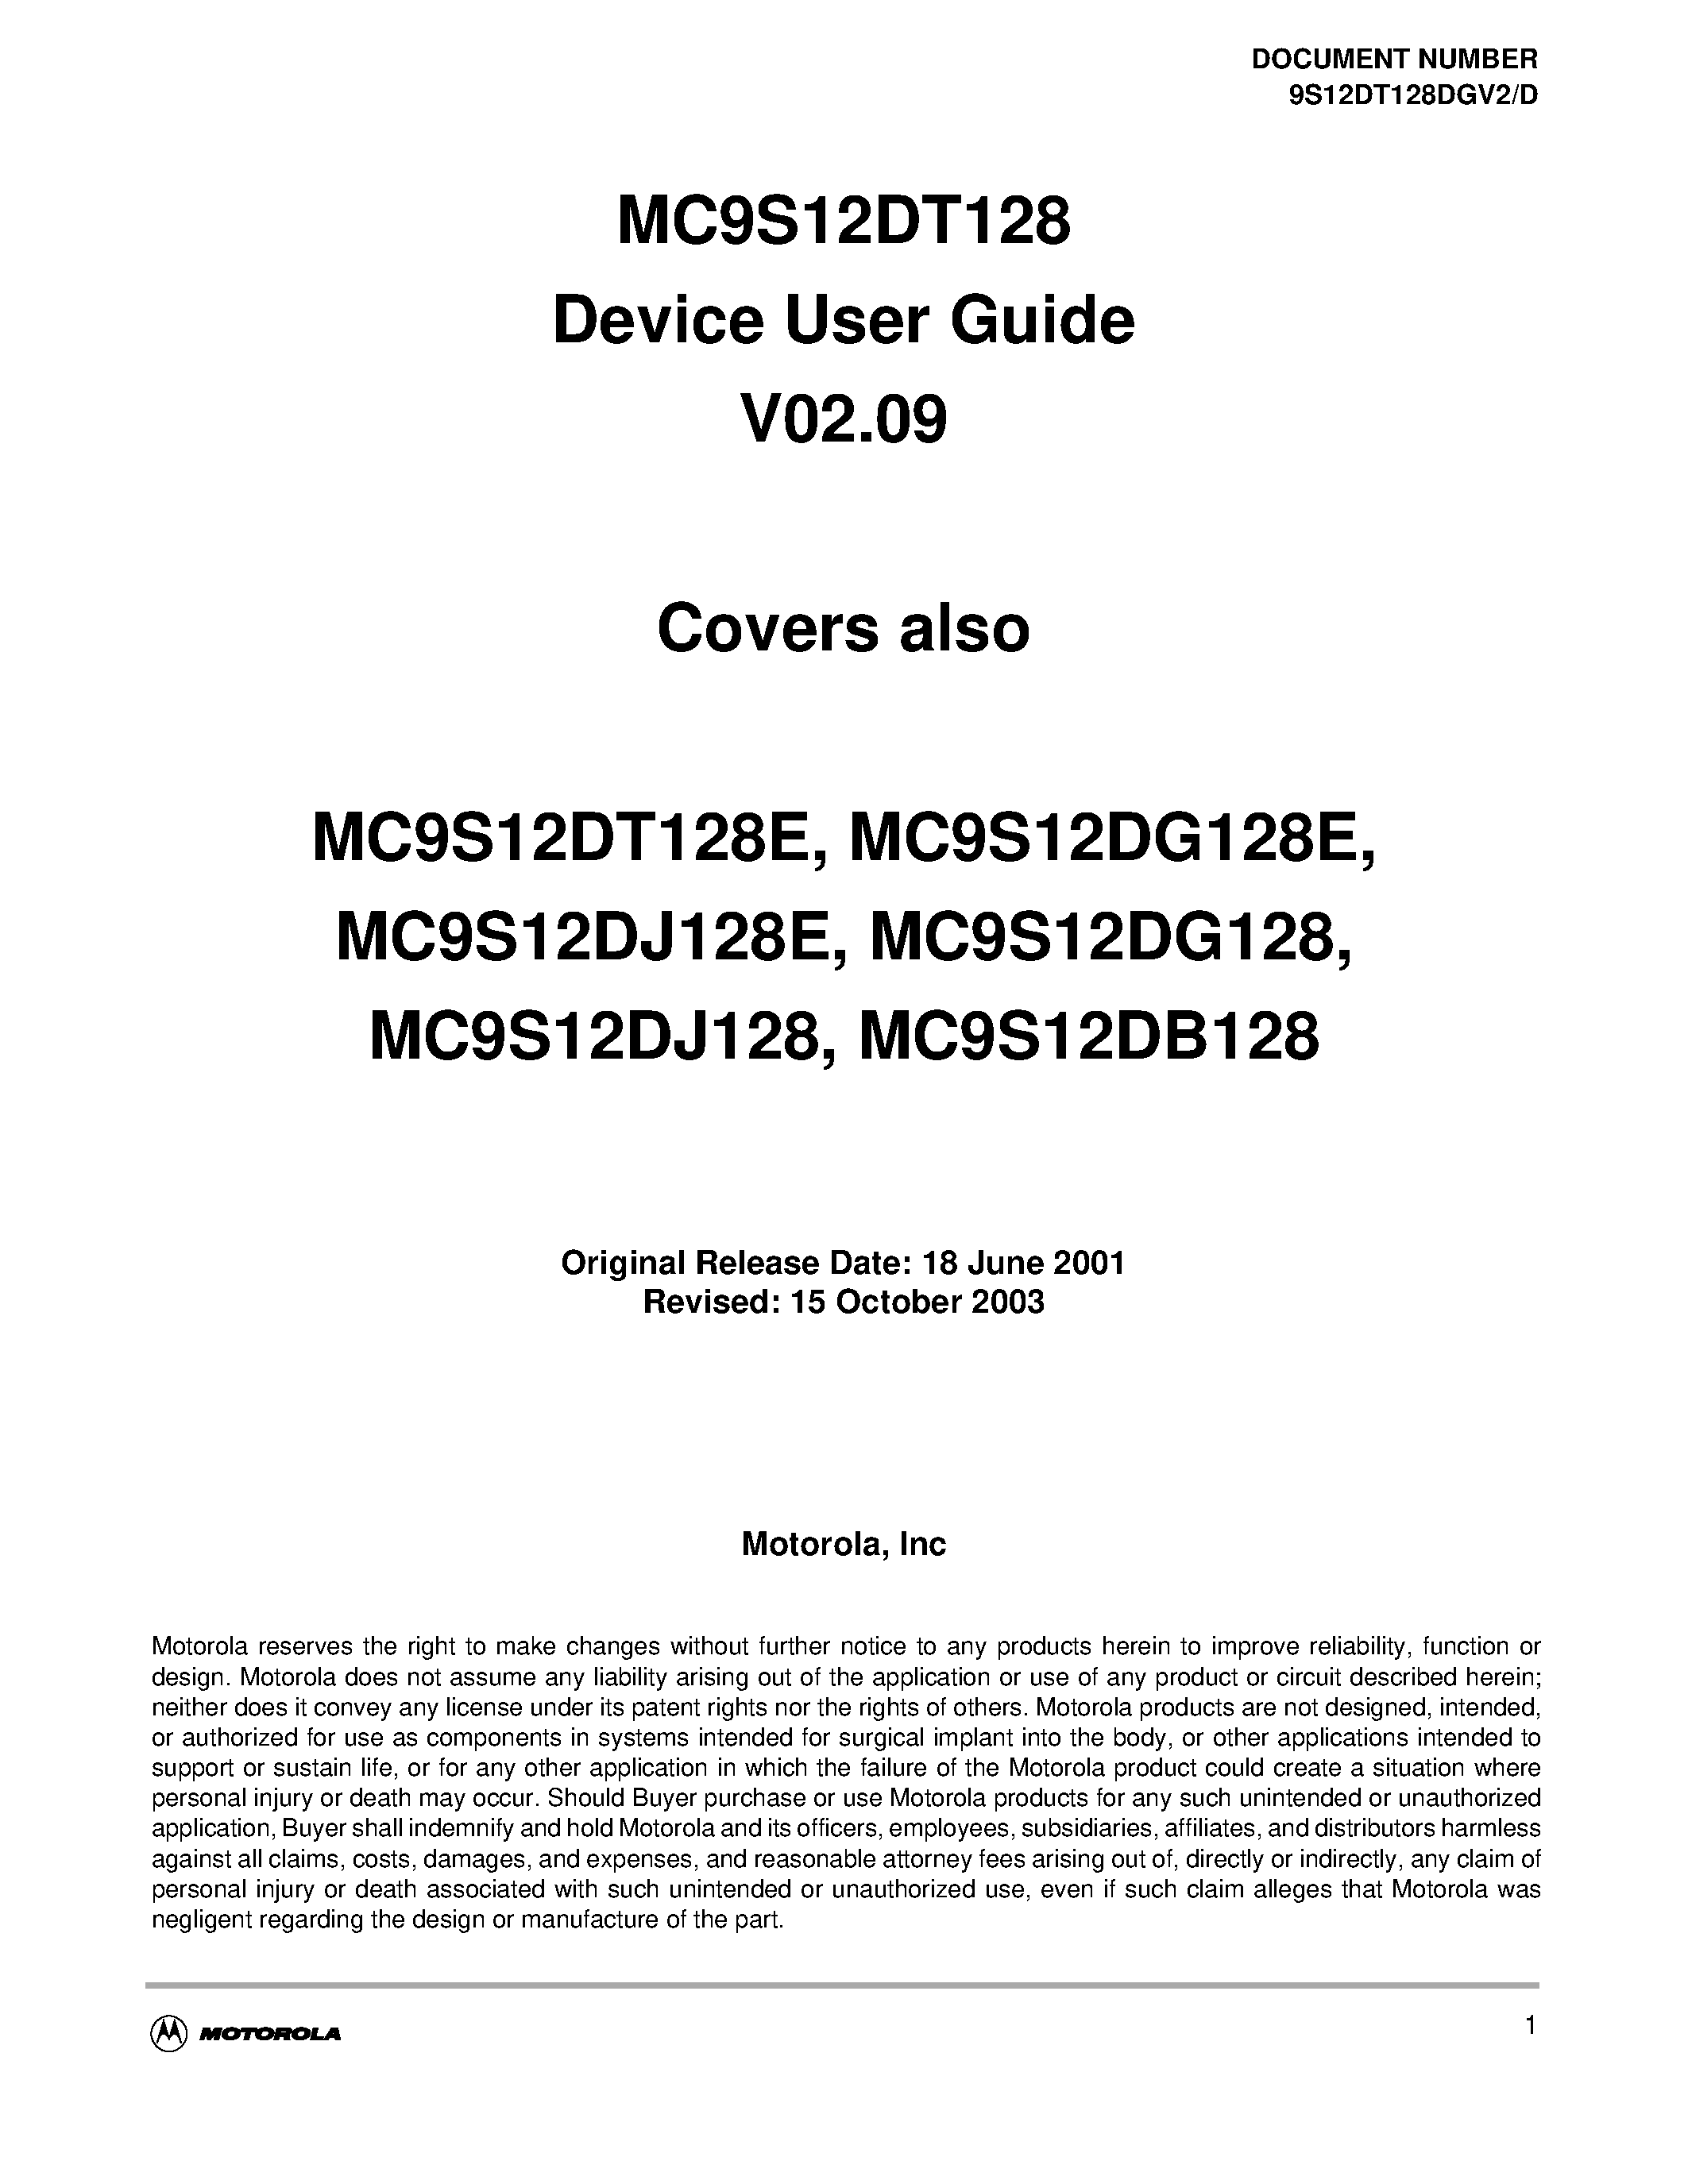 Даташит S12INTV1D - MC9S12DT128 Device User Guide V02.09 страница 1